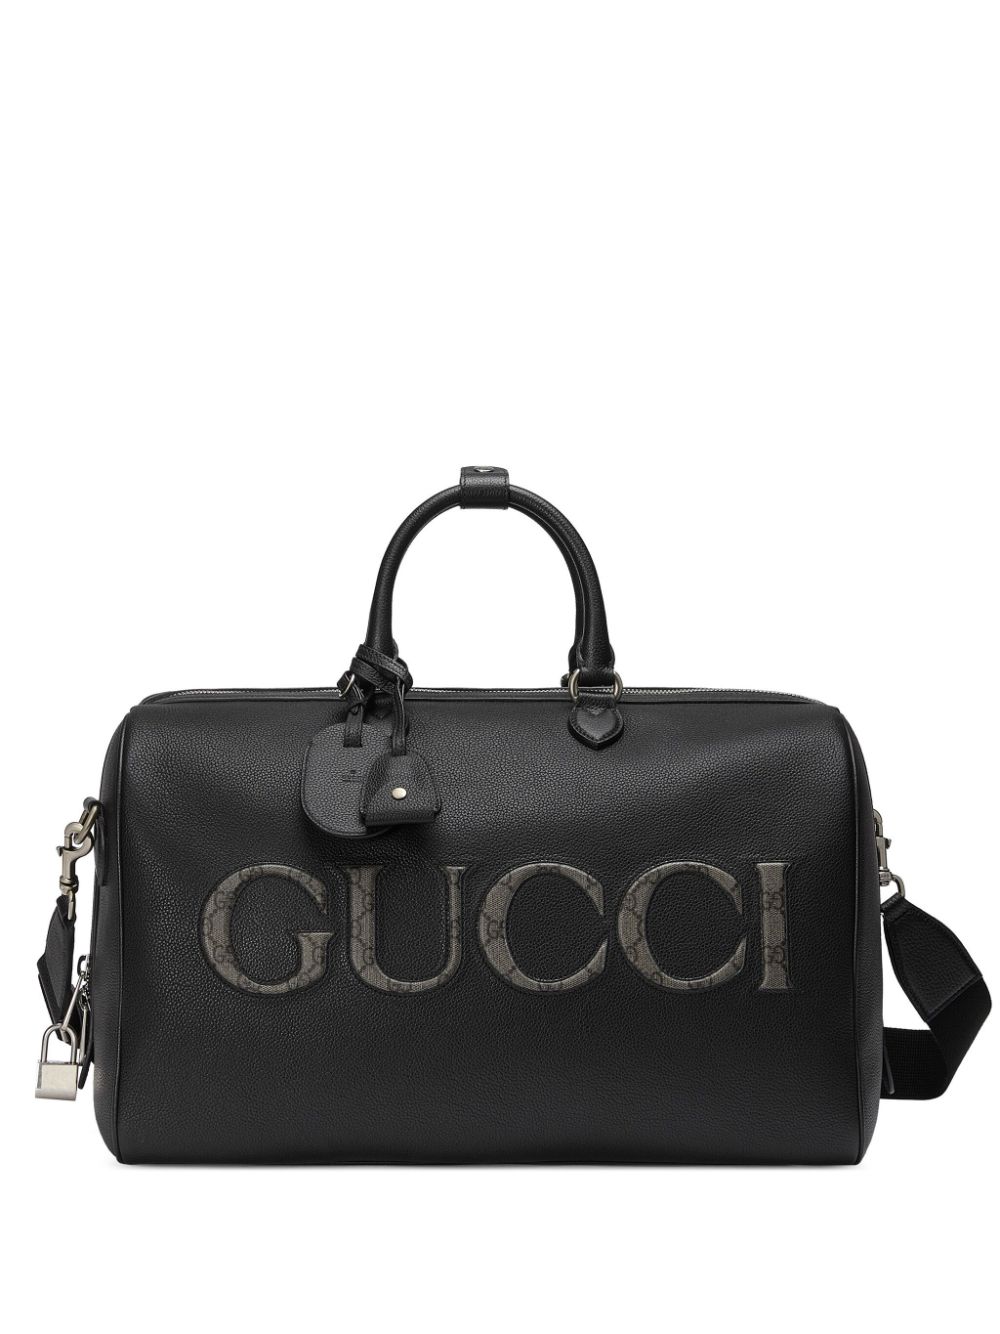 Gucci logo-embossed leather duffle bag - Schwarz